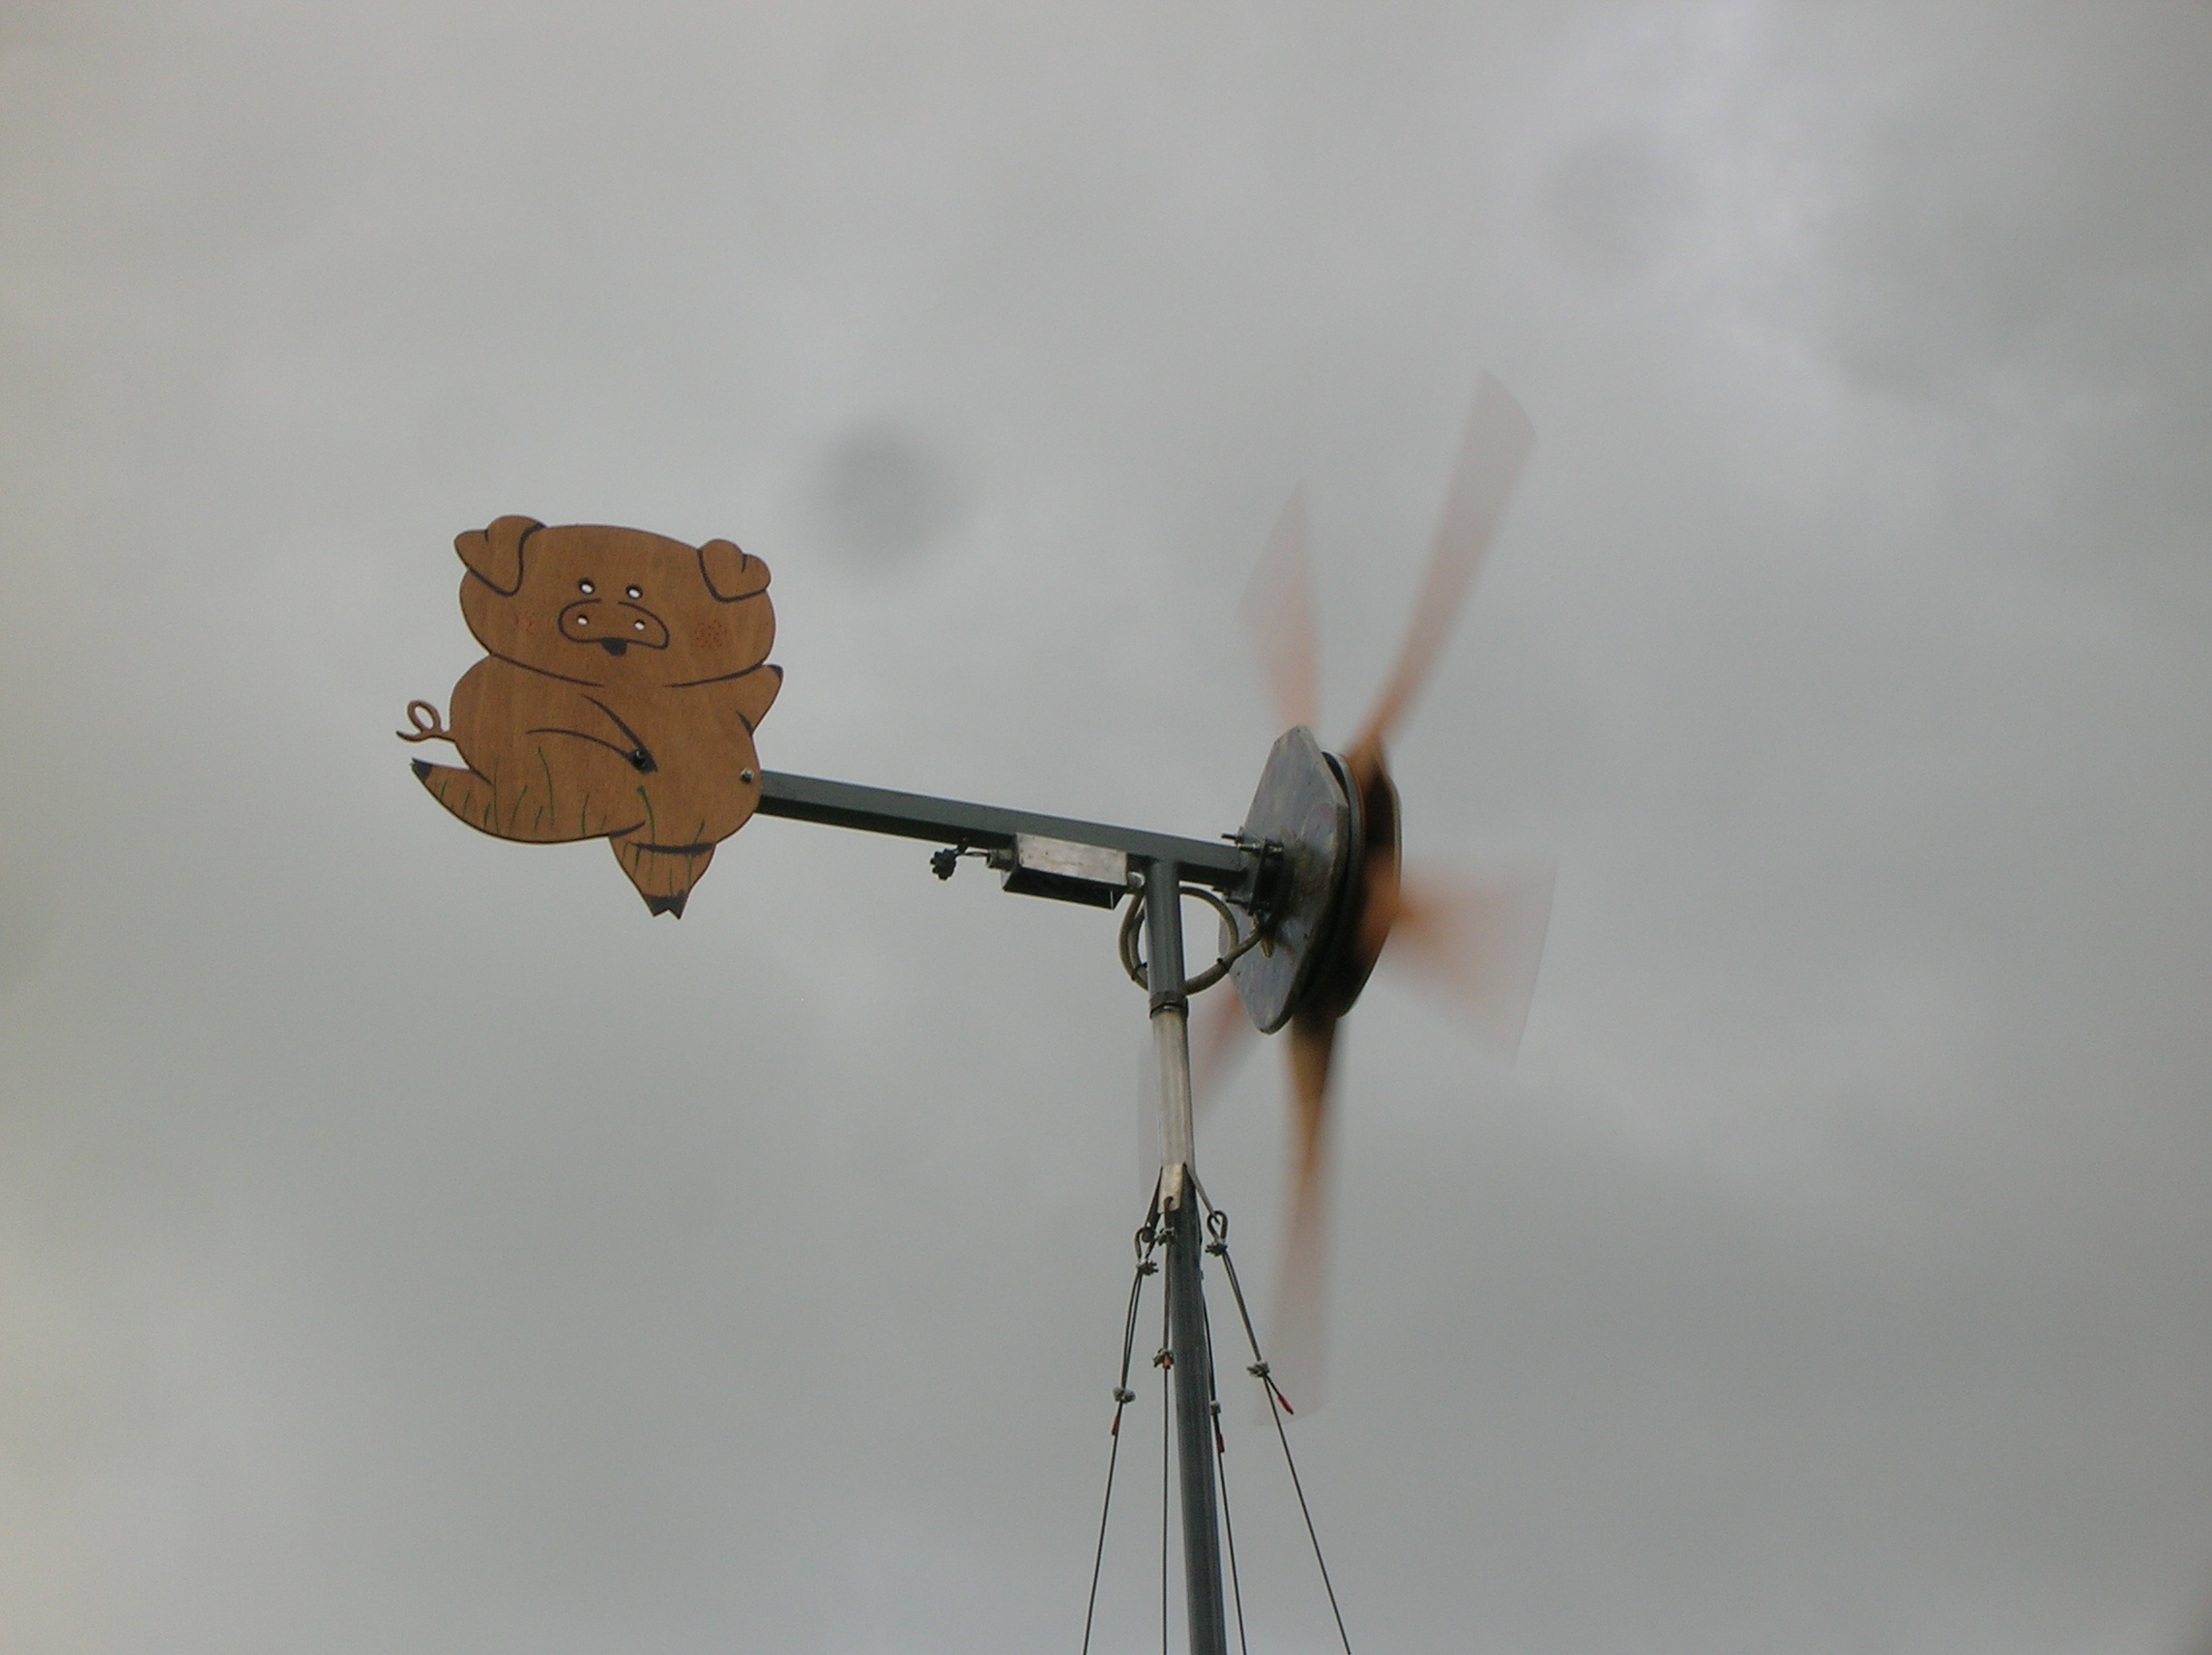 How to build a Micro Wind Turbine | Hugh Piggott's blog